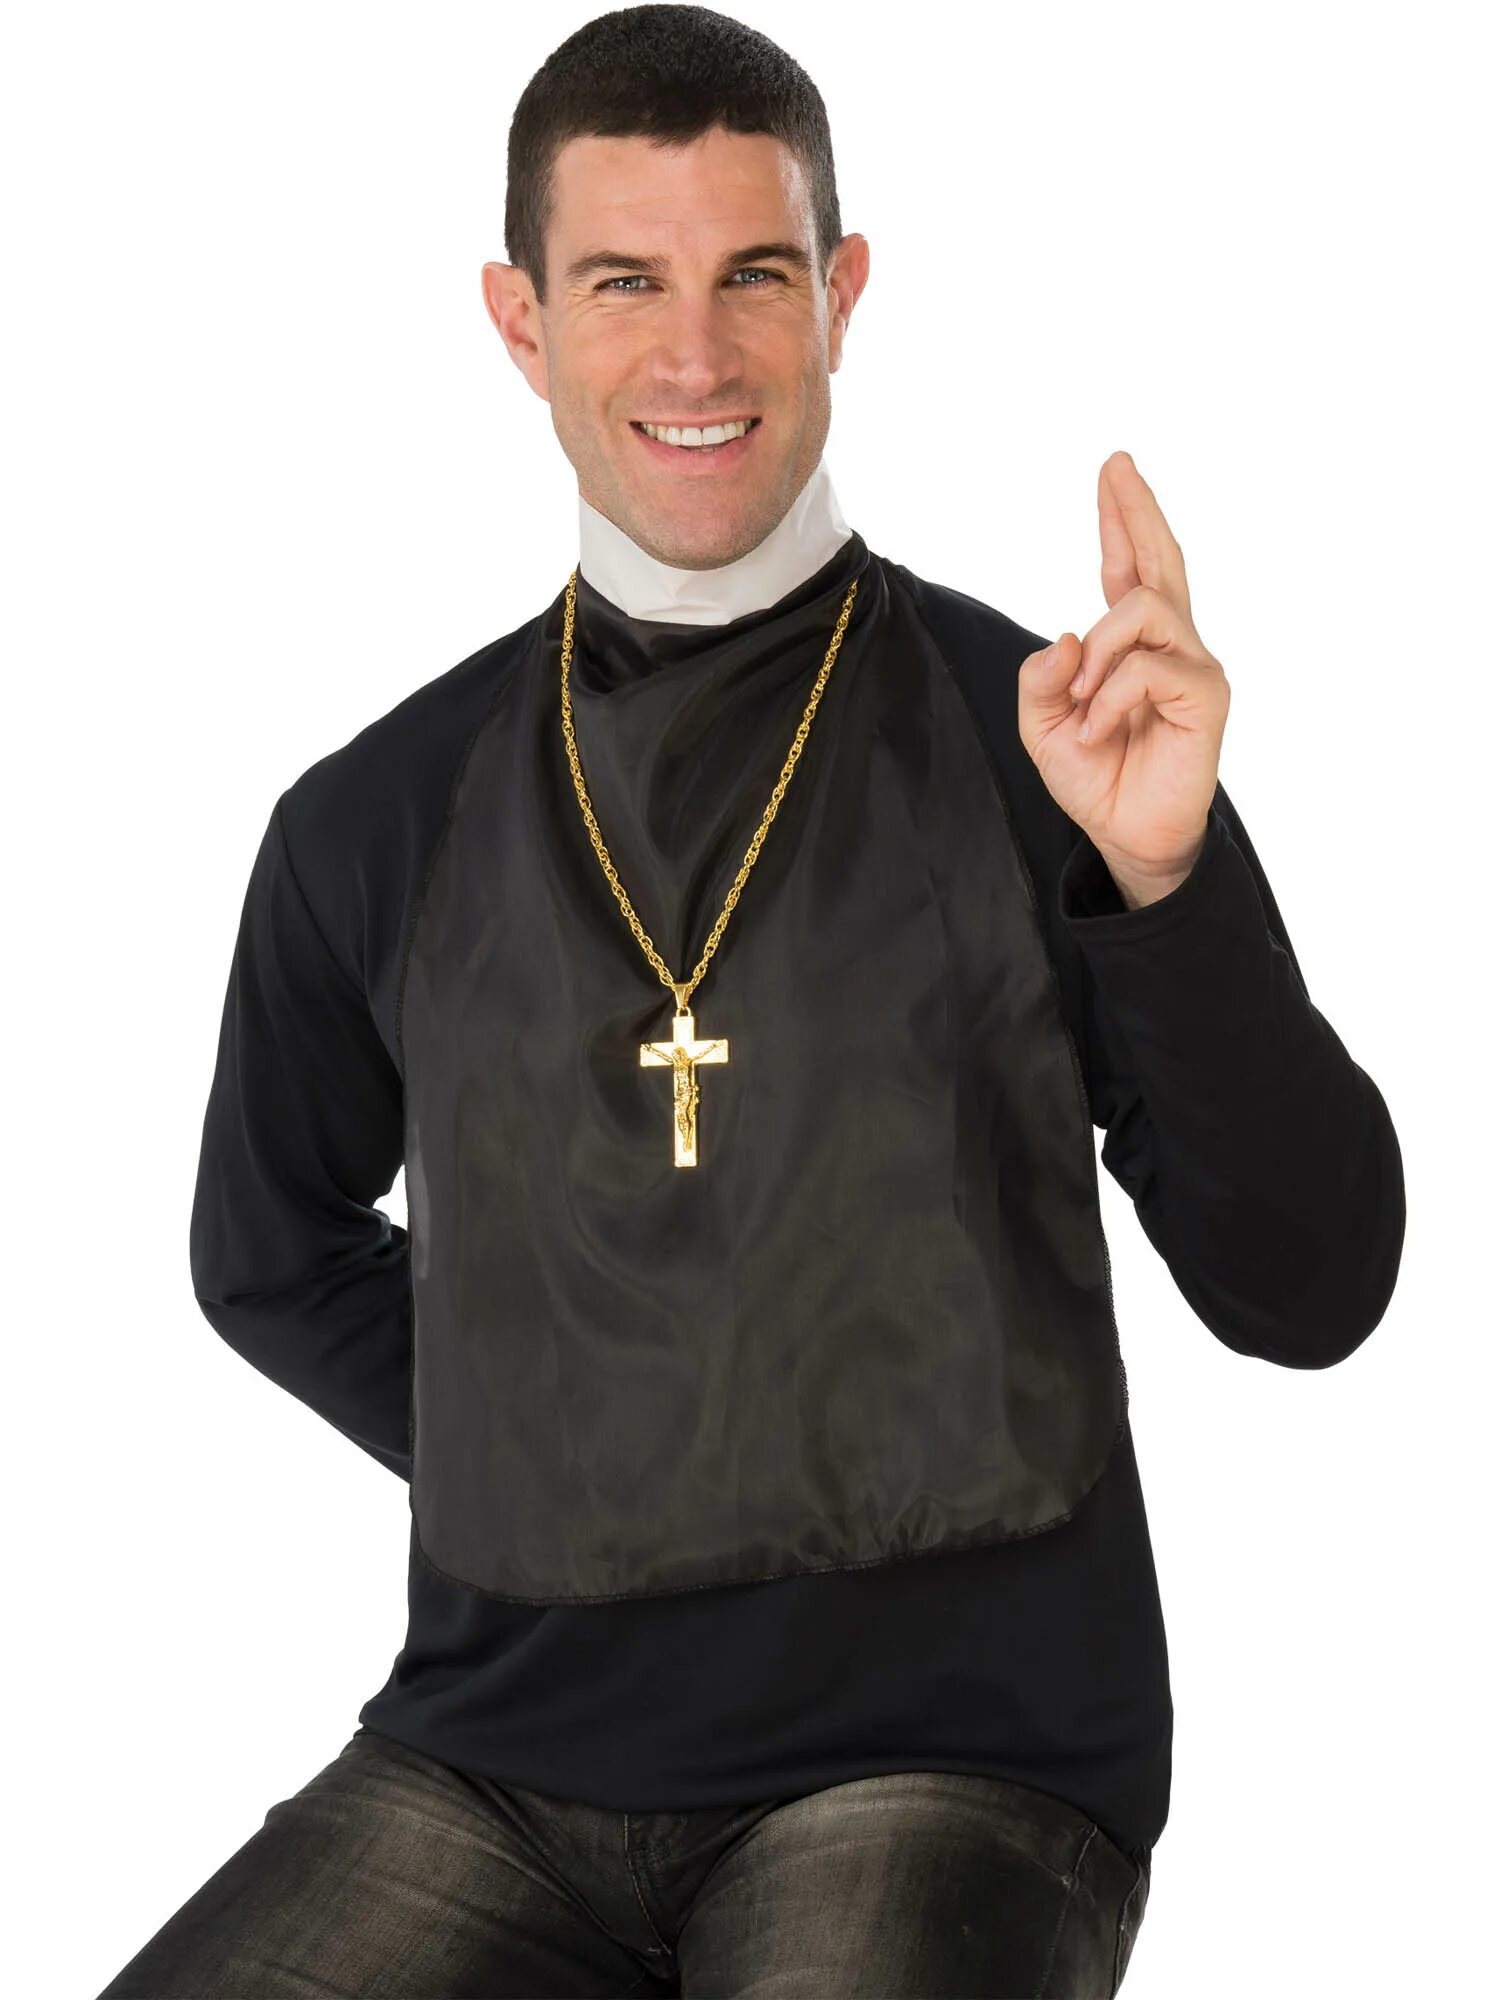 Pri est. Priest фото. Костюм молитва. Priest Collar. Priest Garcia.